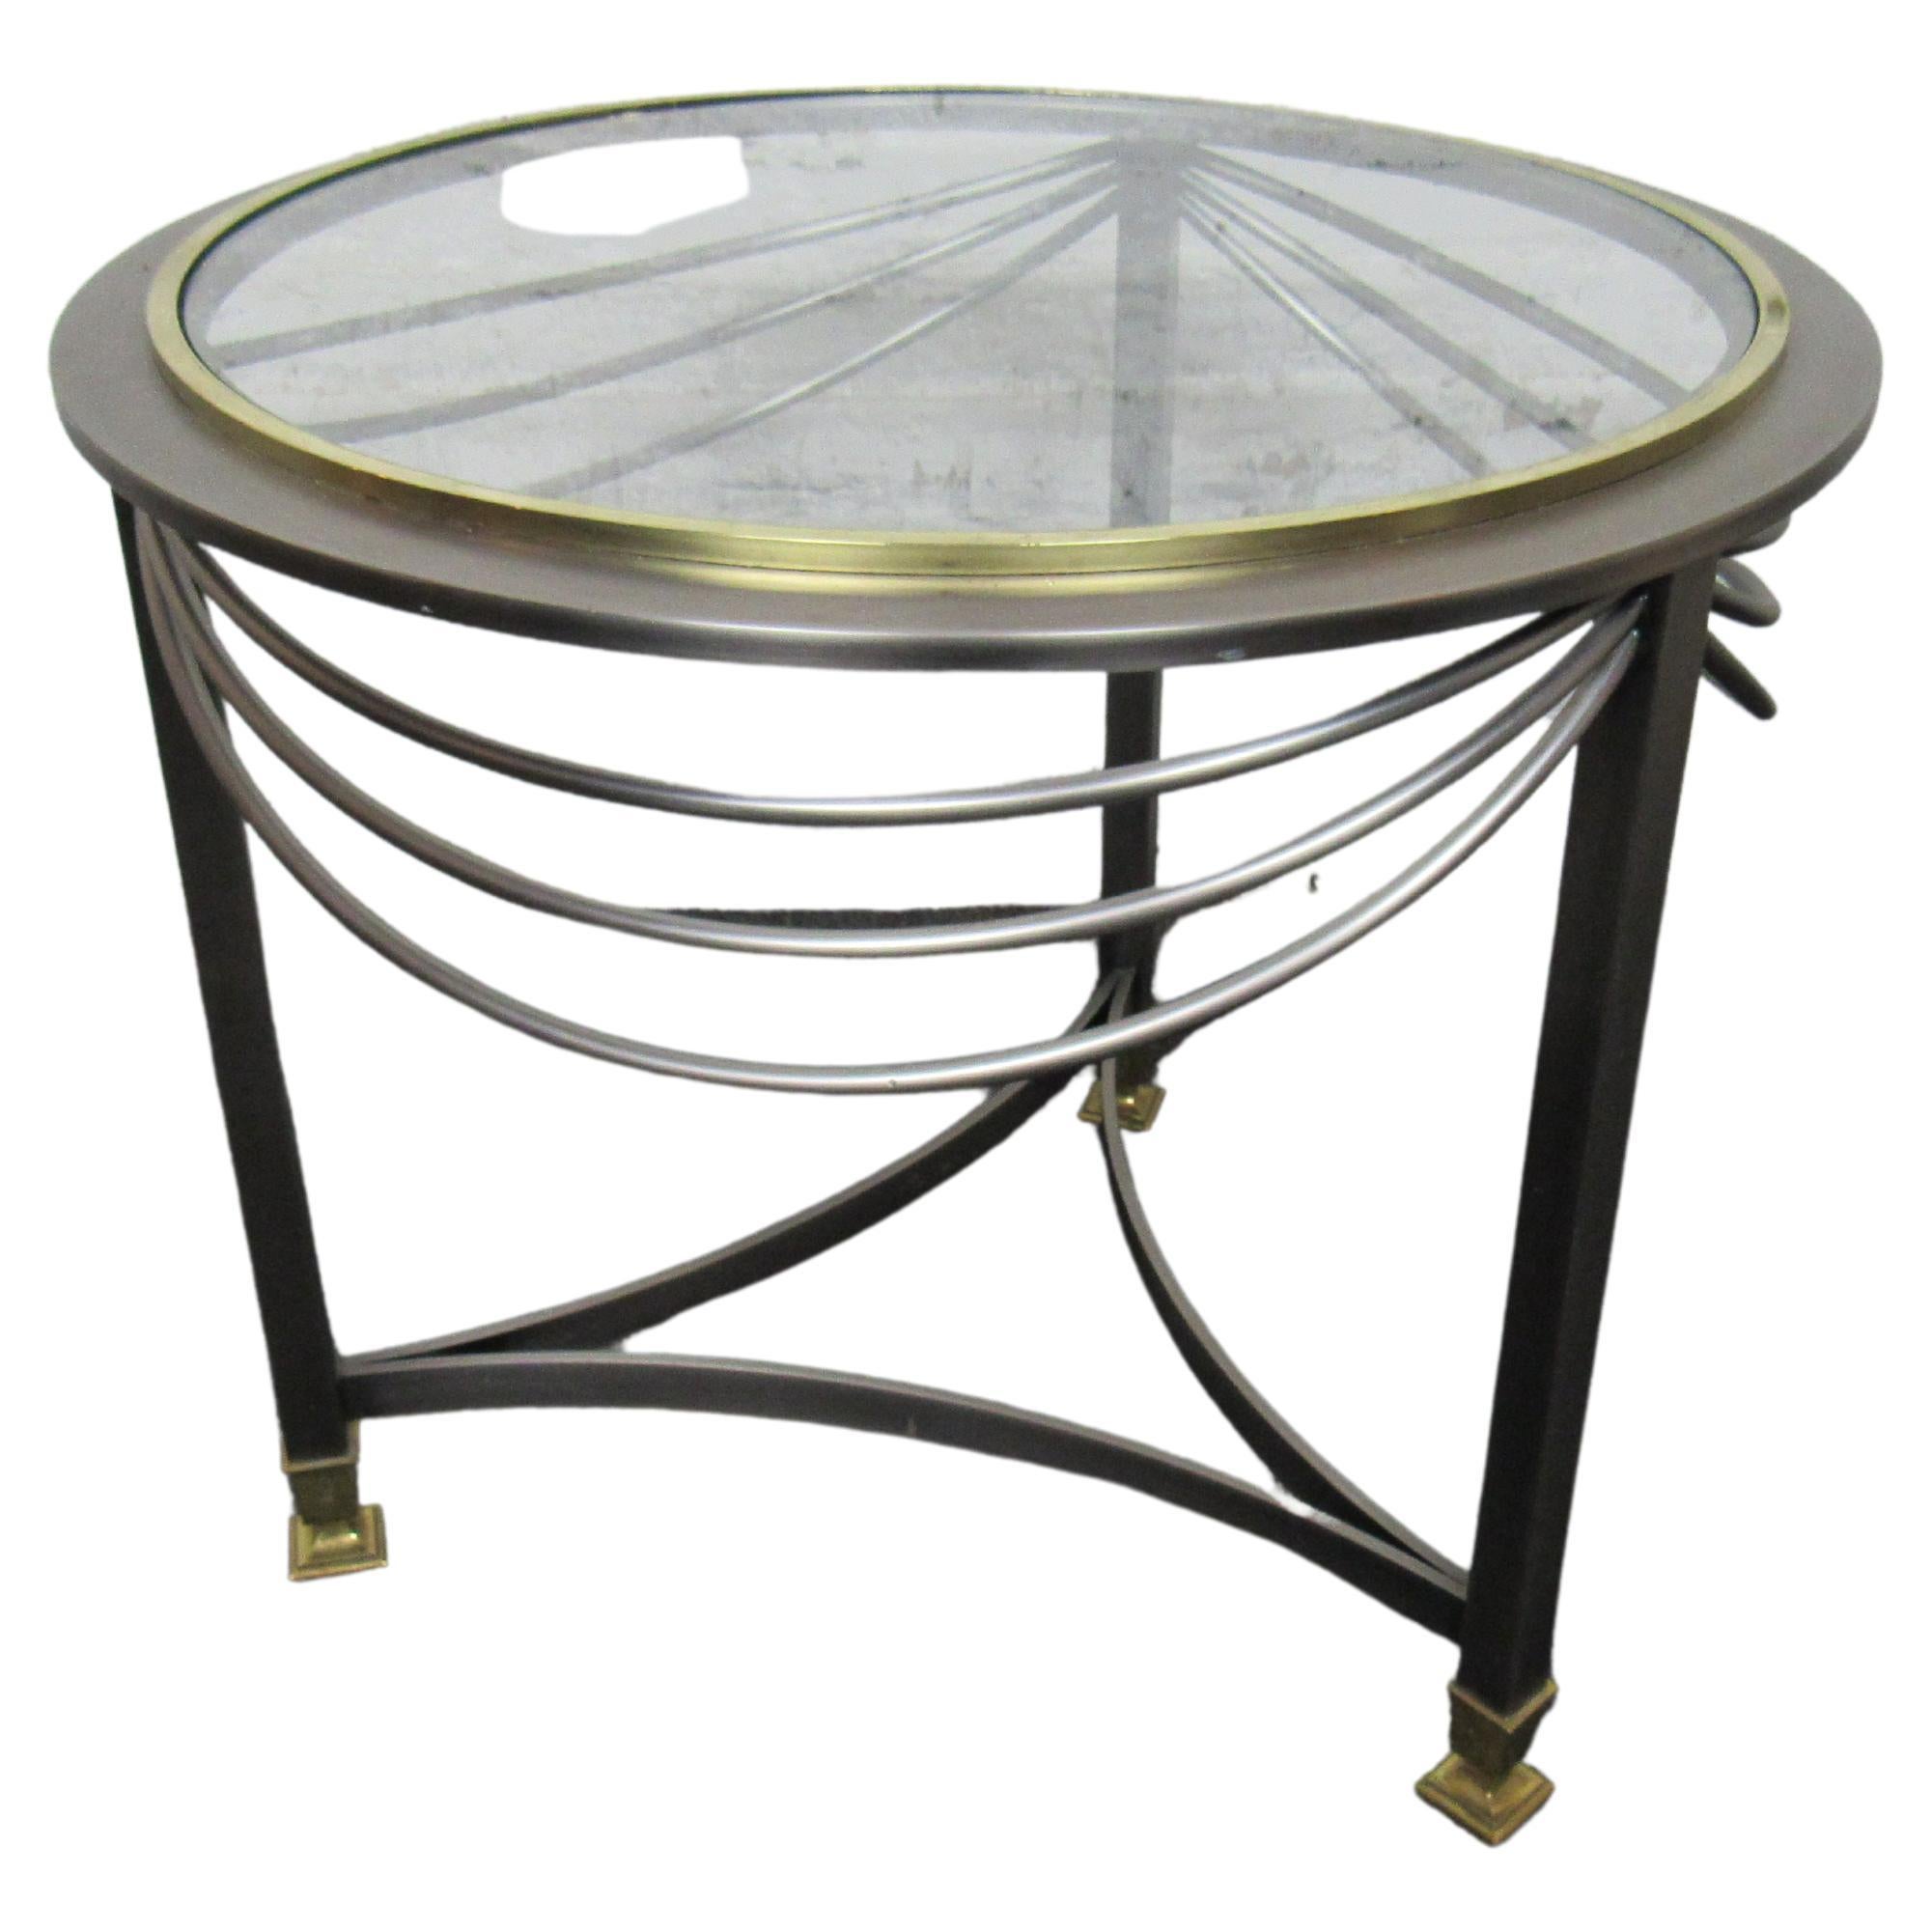 Mid-Century Modern Metal & Glass Coffee Table